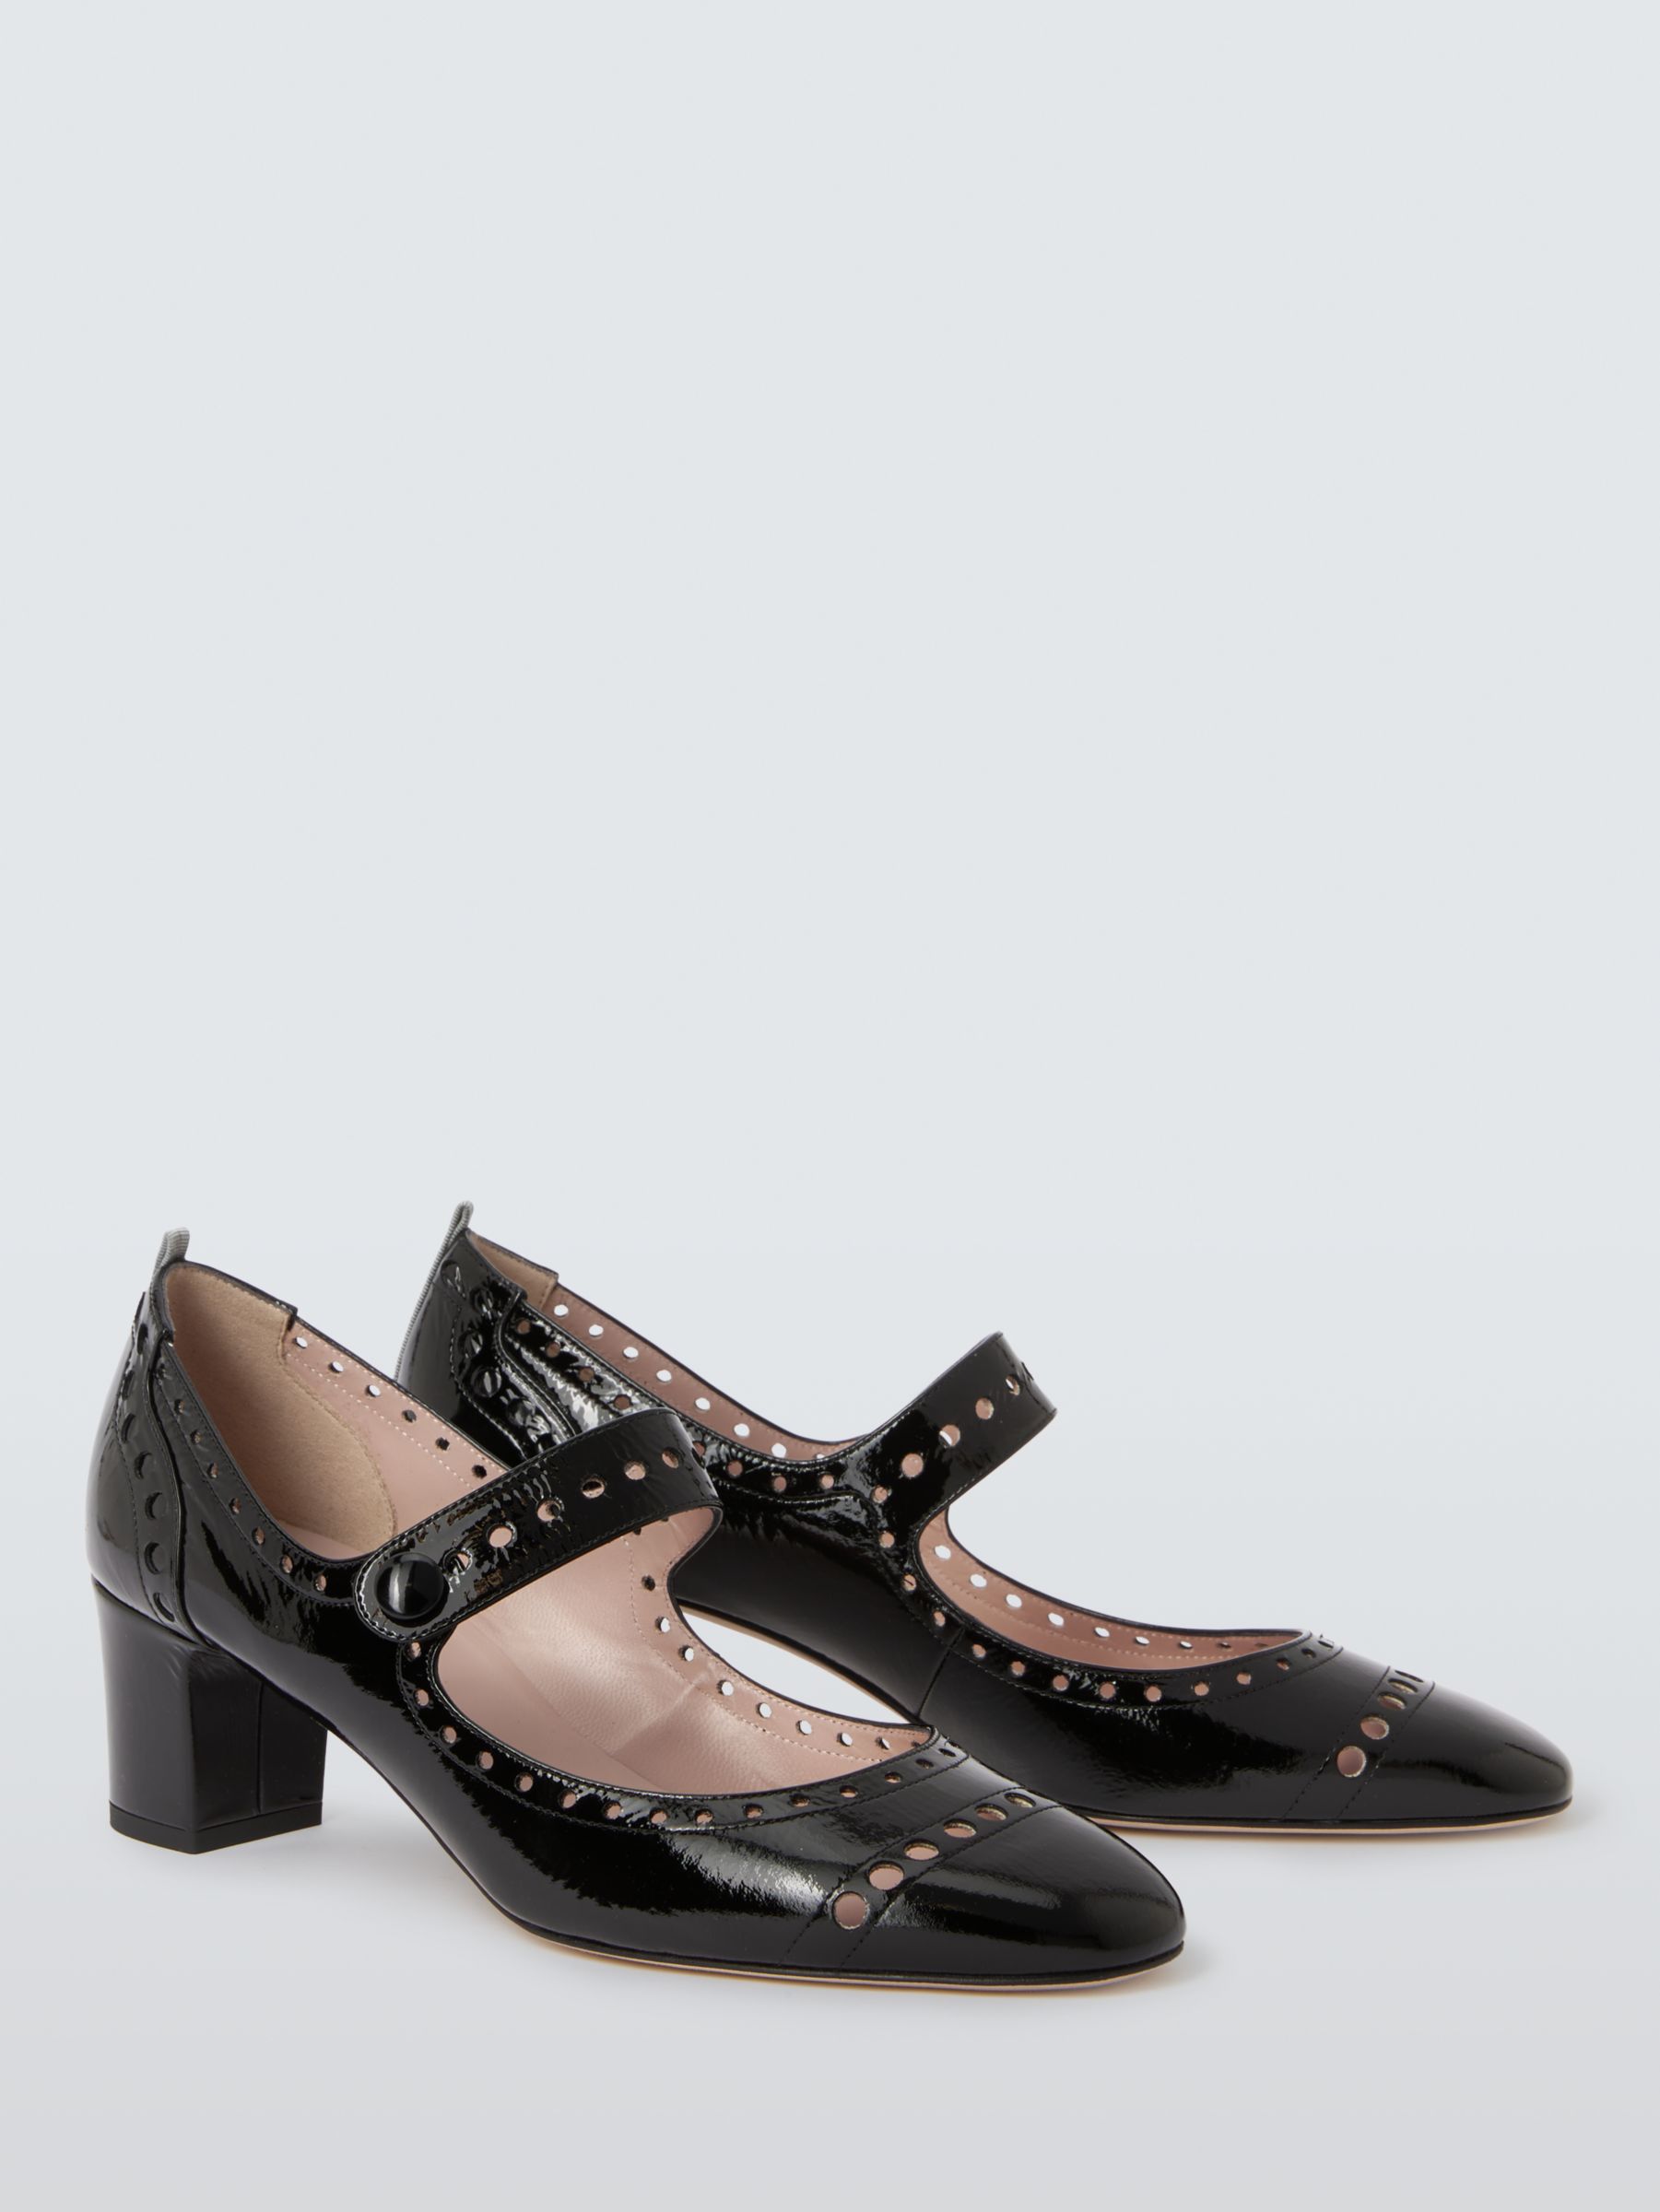 SJP by Sarah Jessica Parker Tartt Patent Leather Mary Jane Shoes, Black, 6